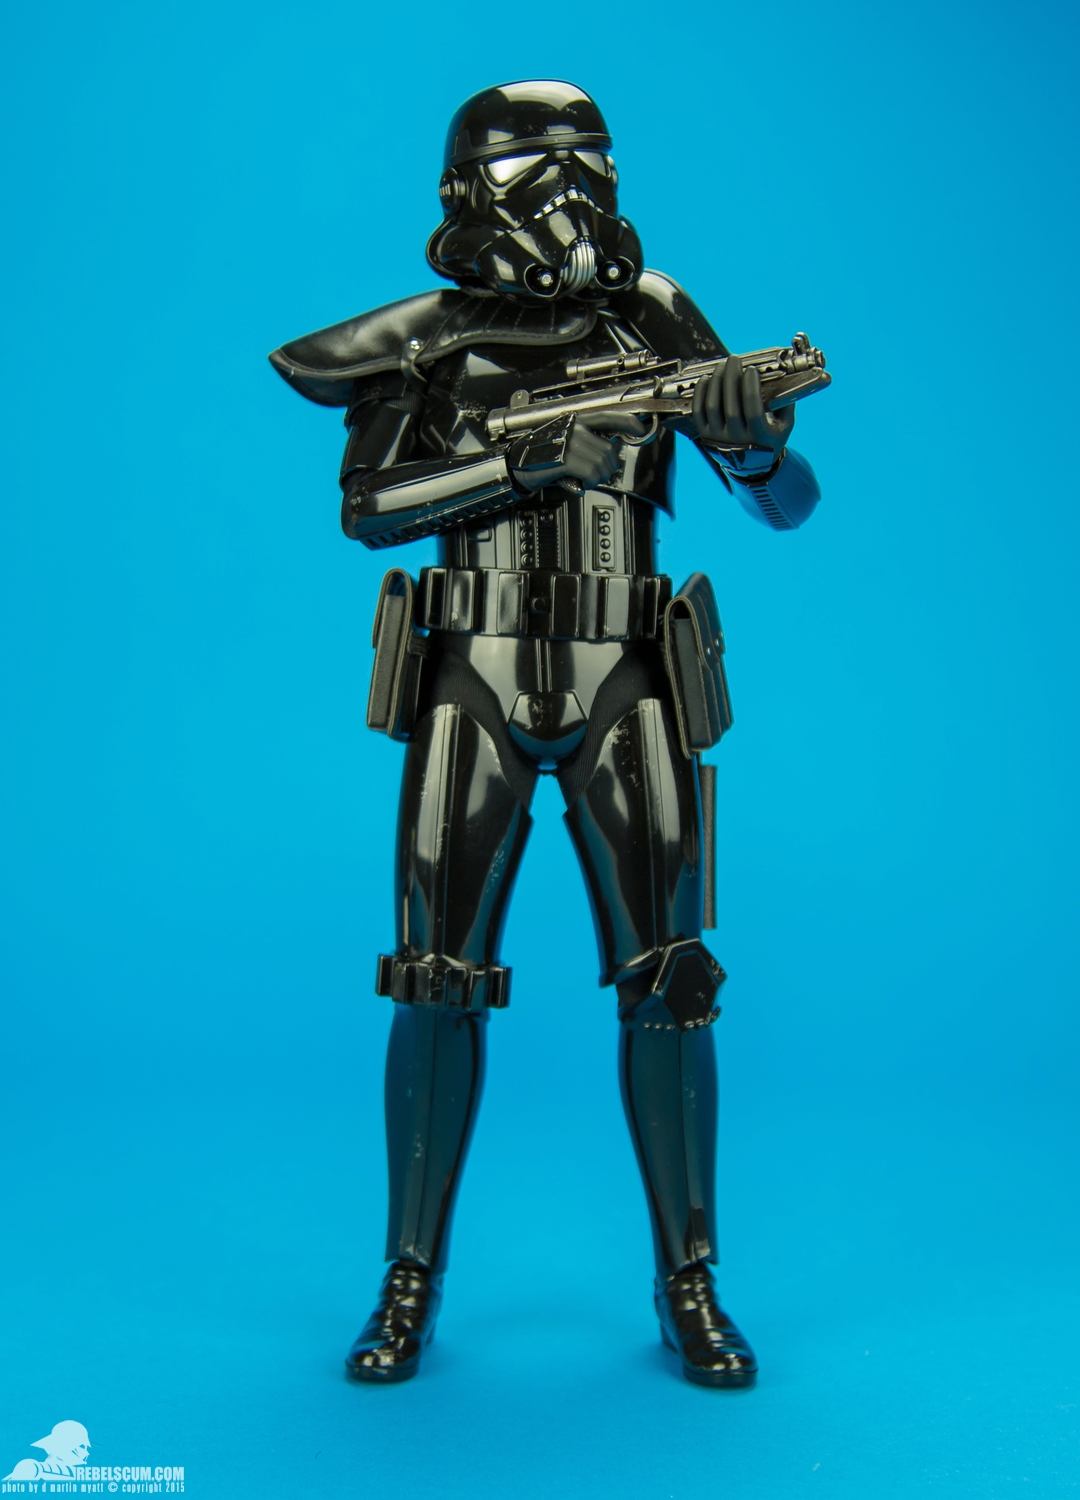 MMS271-Shadow-trooper-Hot-Toys-Star-Wars-figure-014.jpg